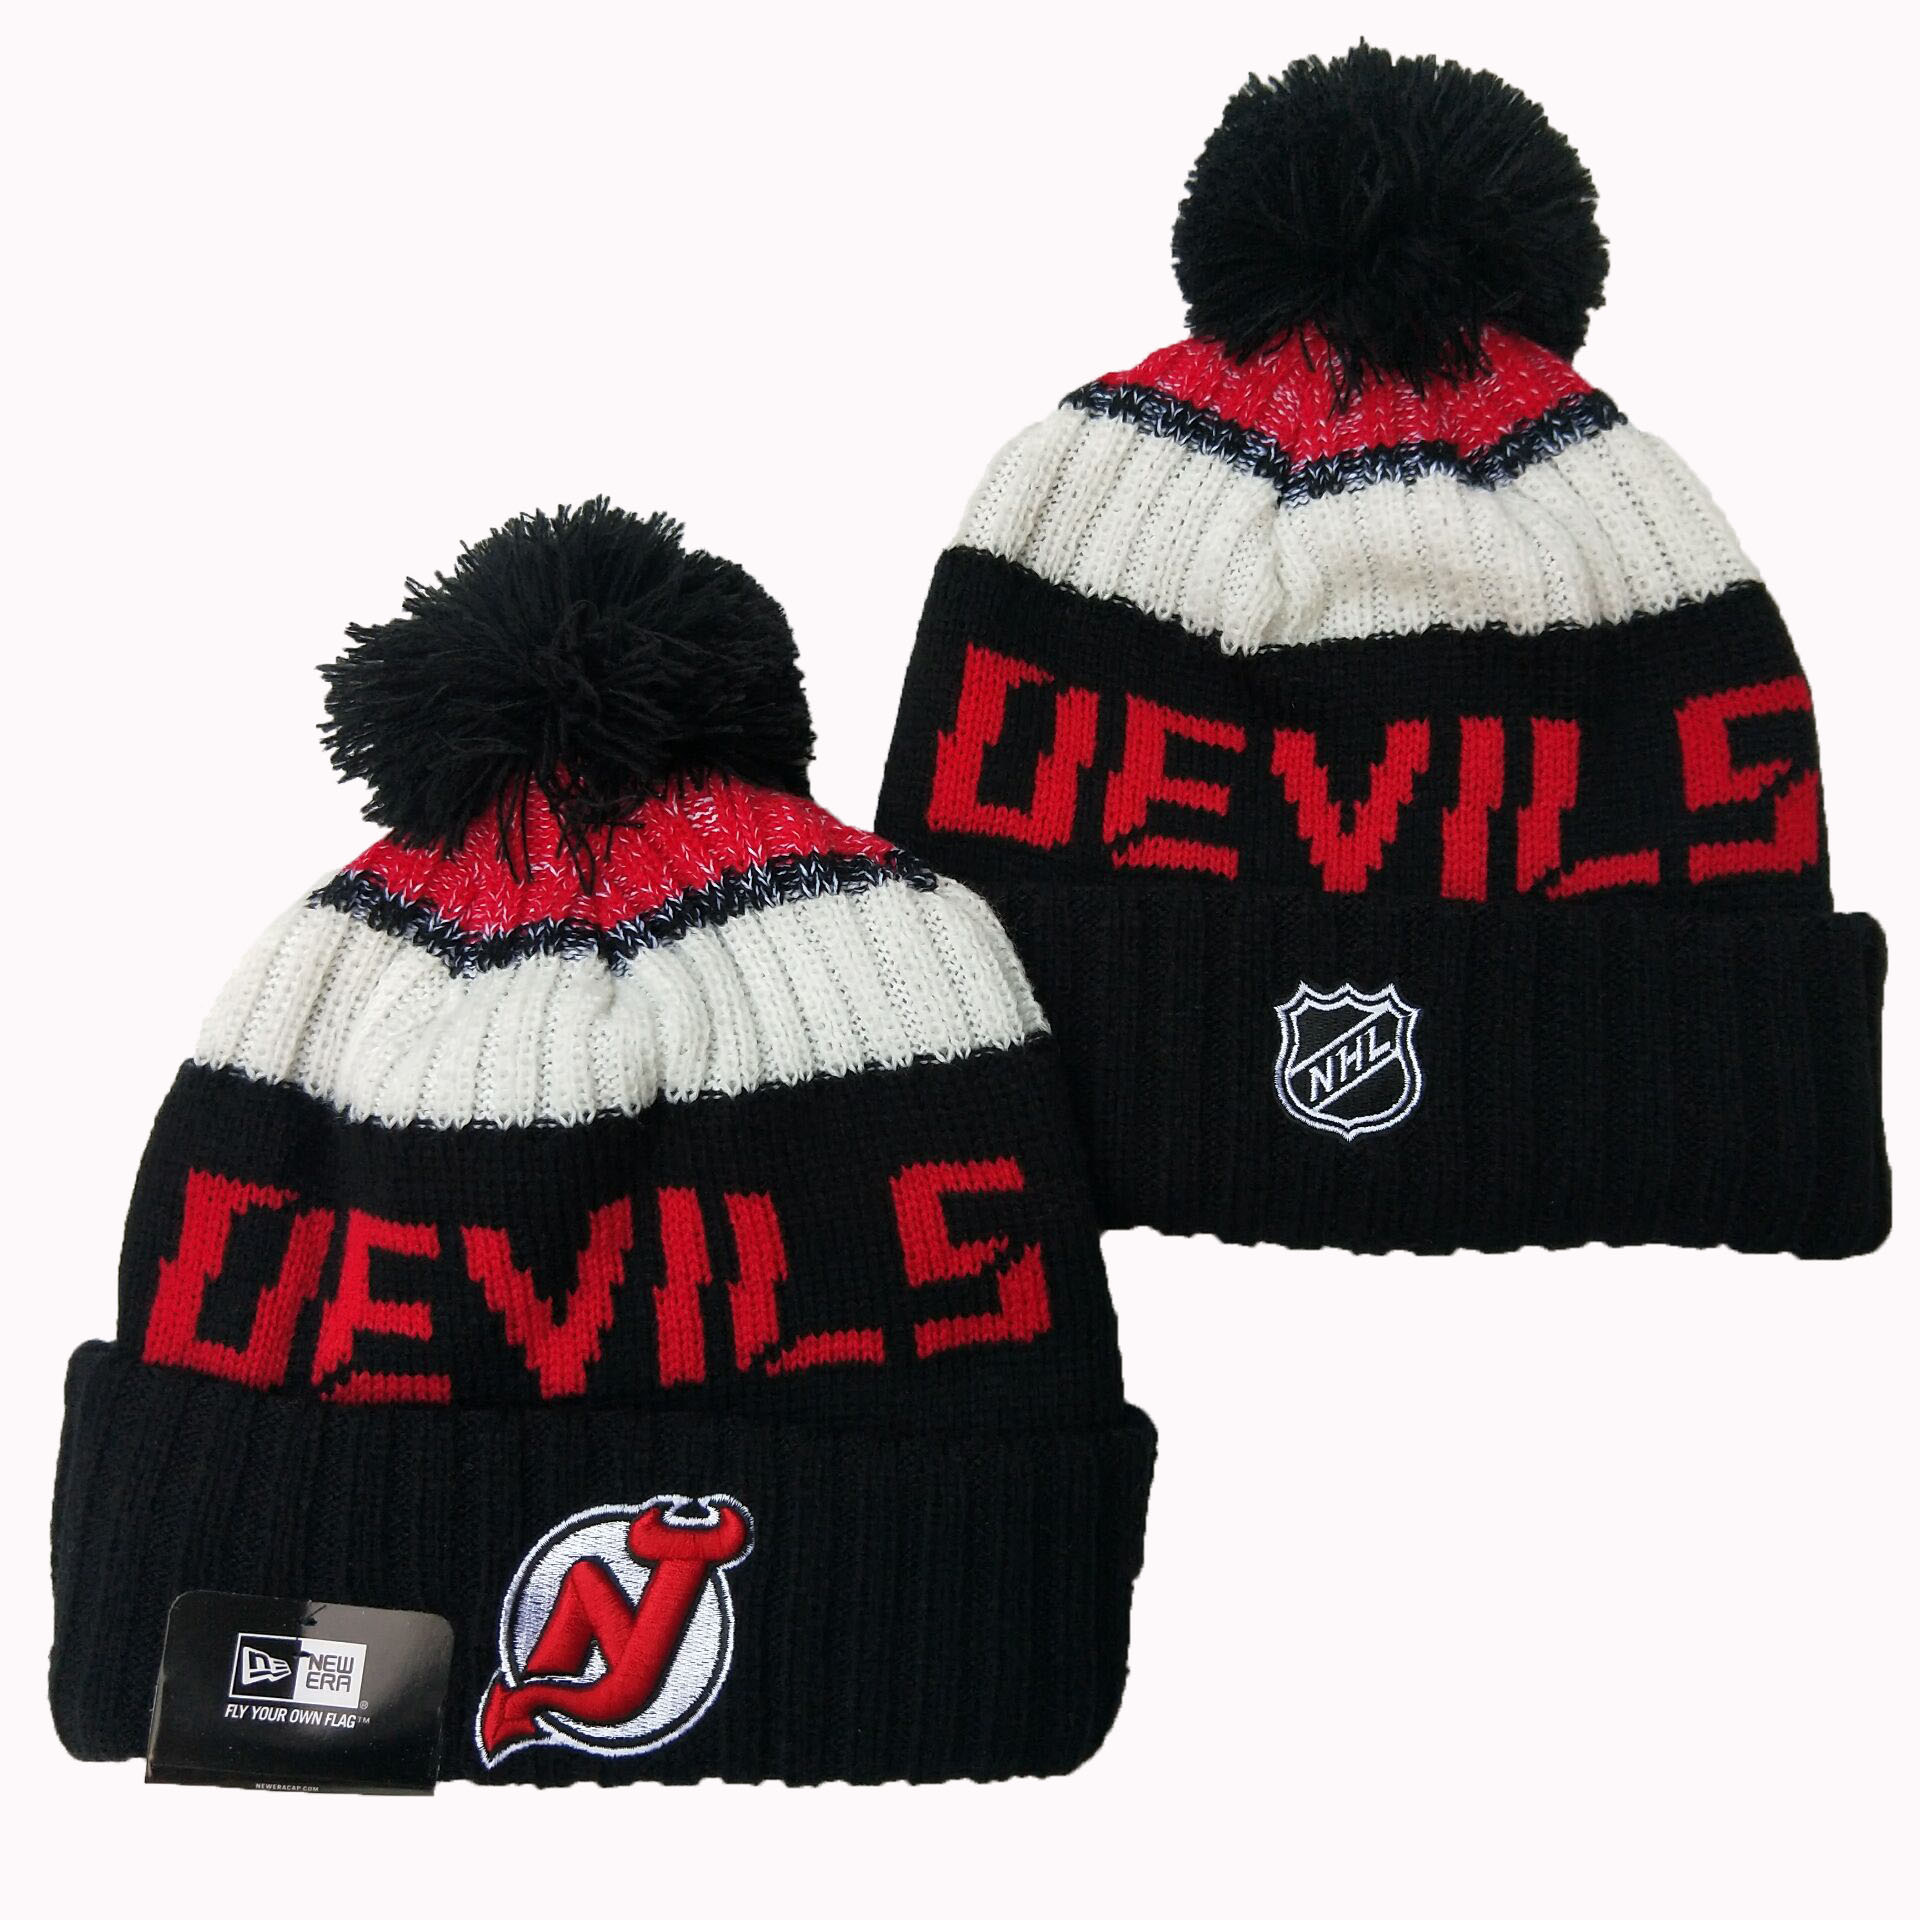 NHL New Jersey Devils Beanies Knit Hats-YD1576